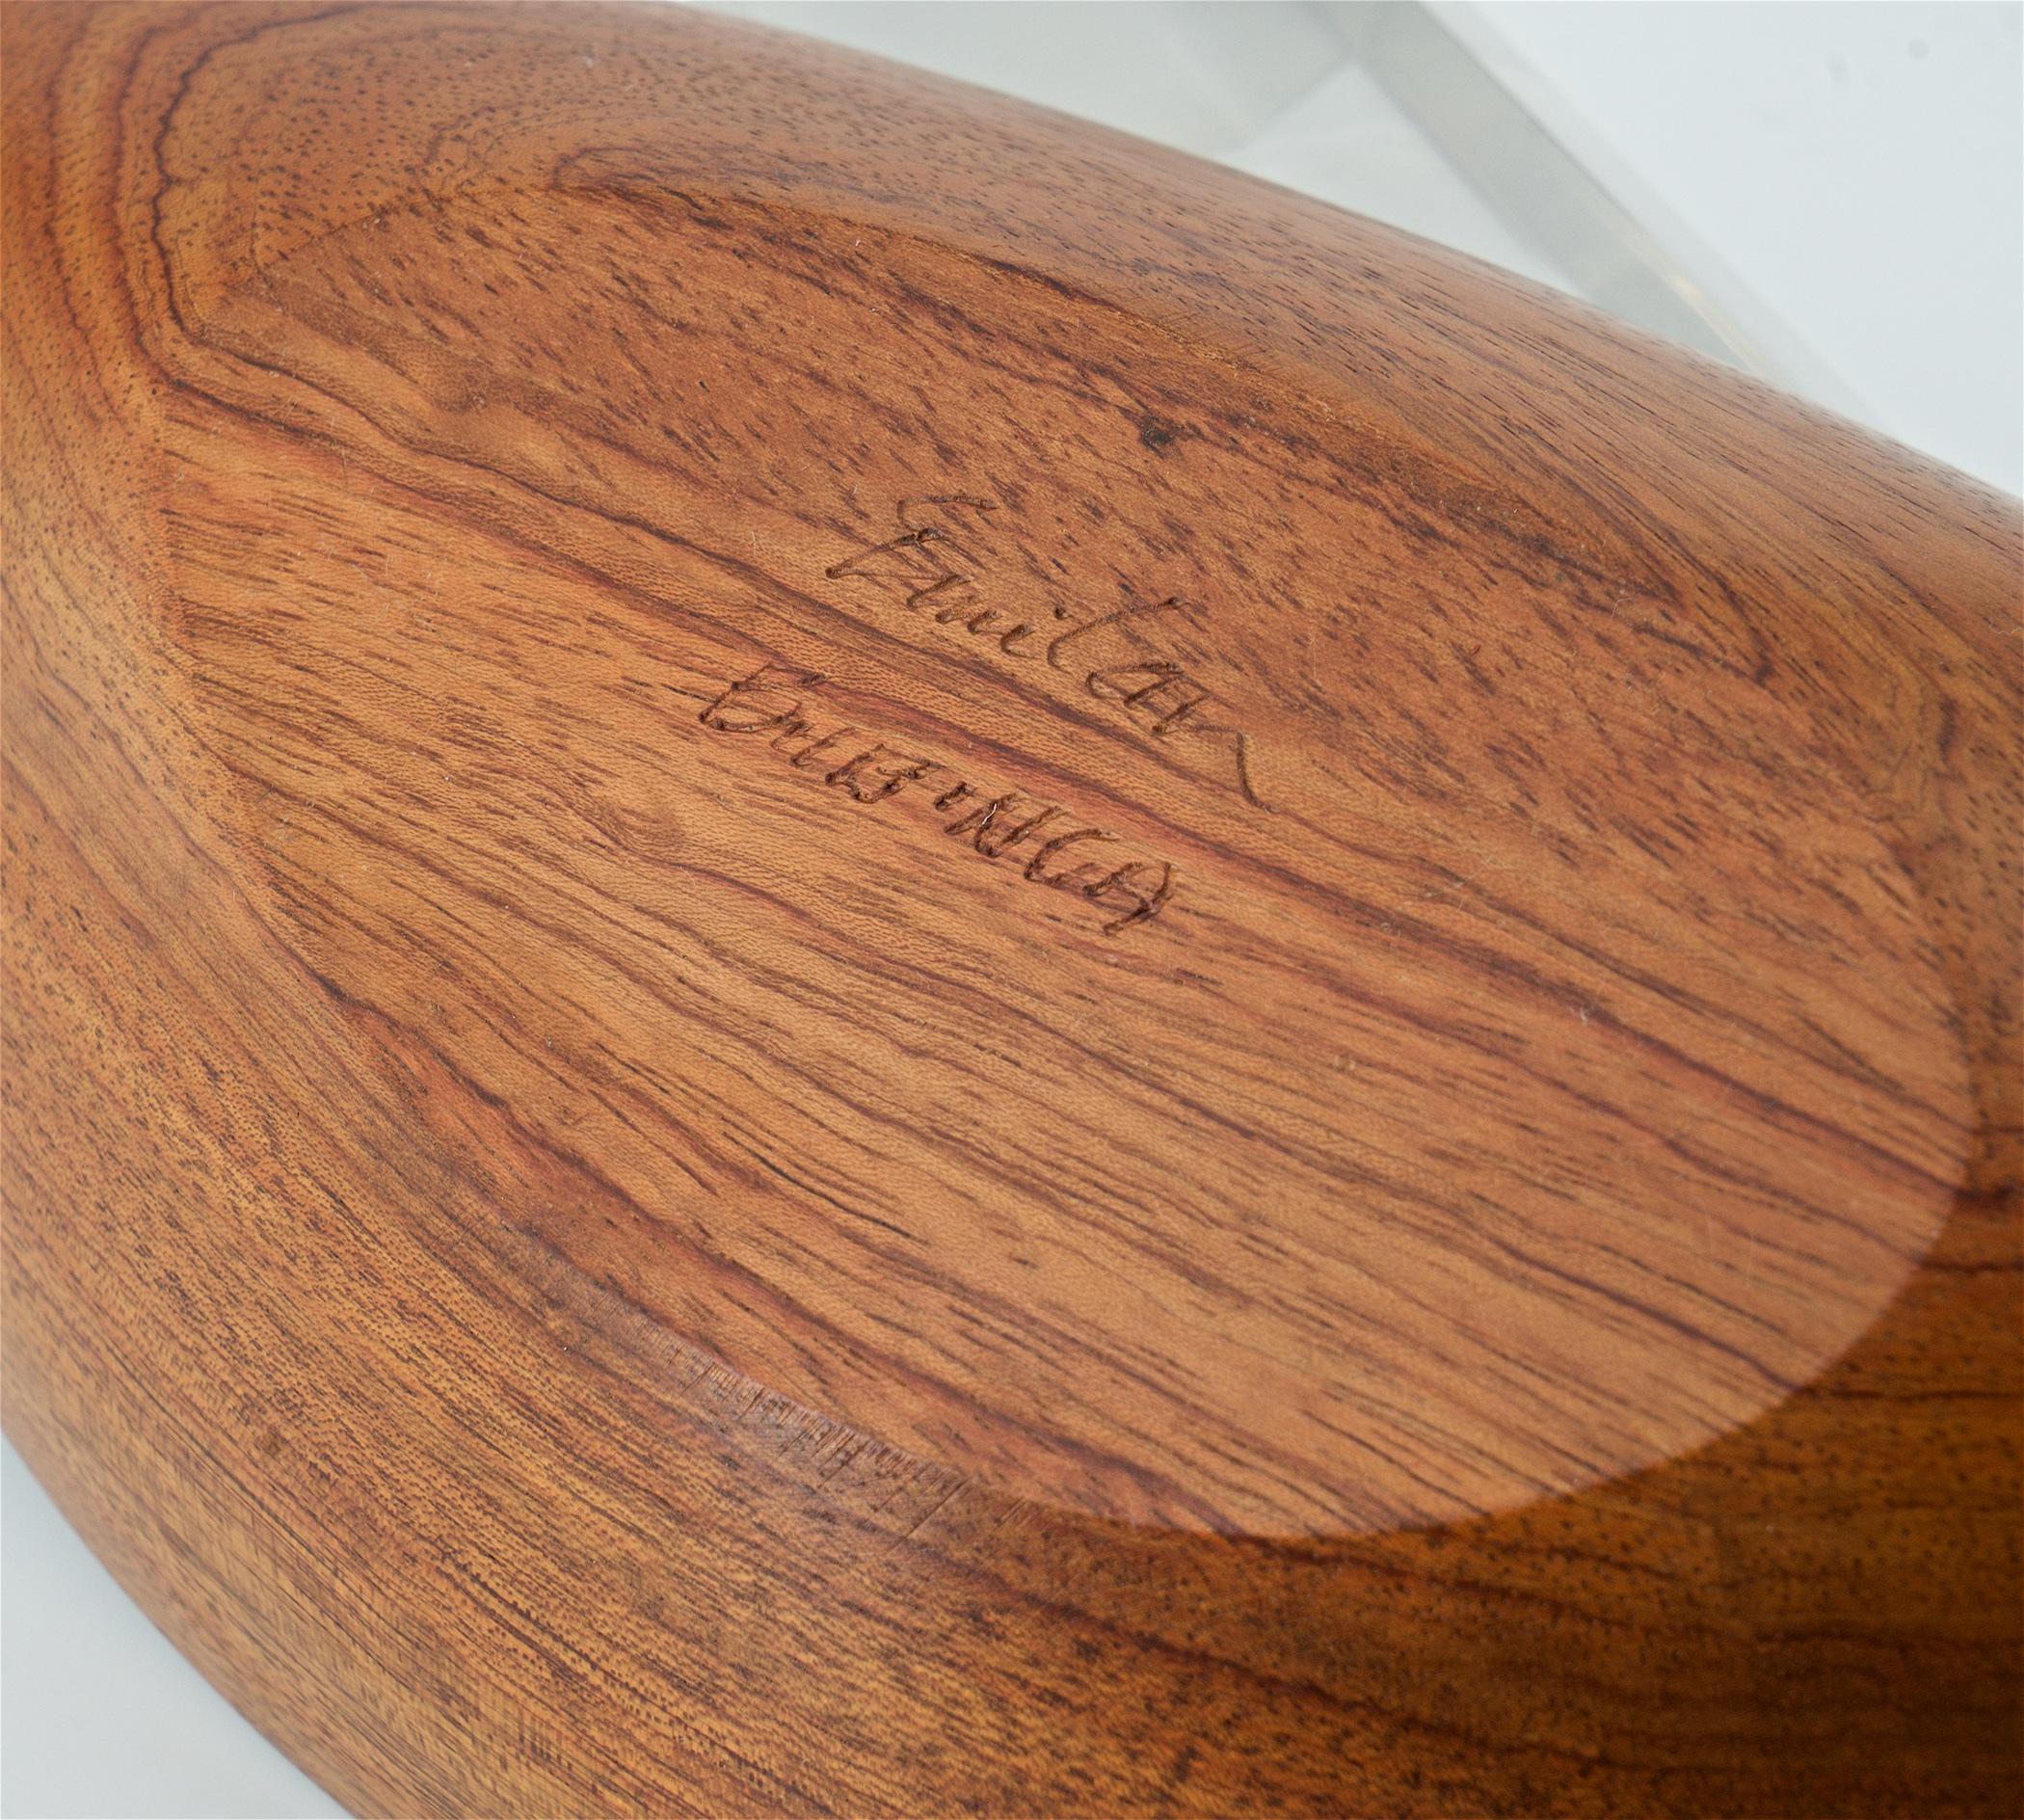 Centerpiece Rare Wood Fruit Bowl Mid 20th Century American Craftsman Design For Sale 2